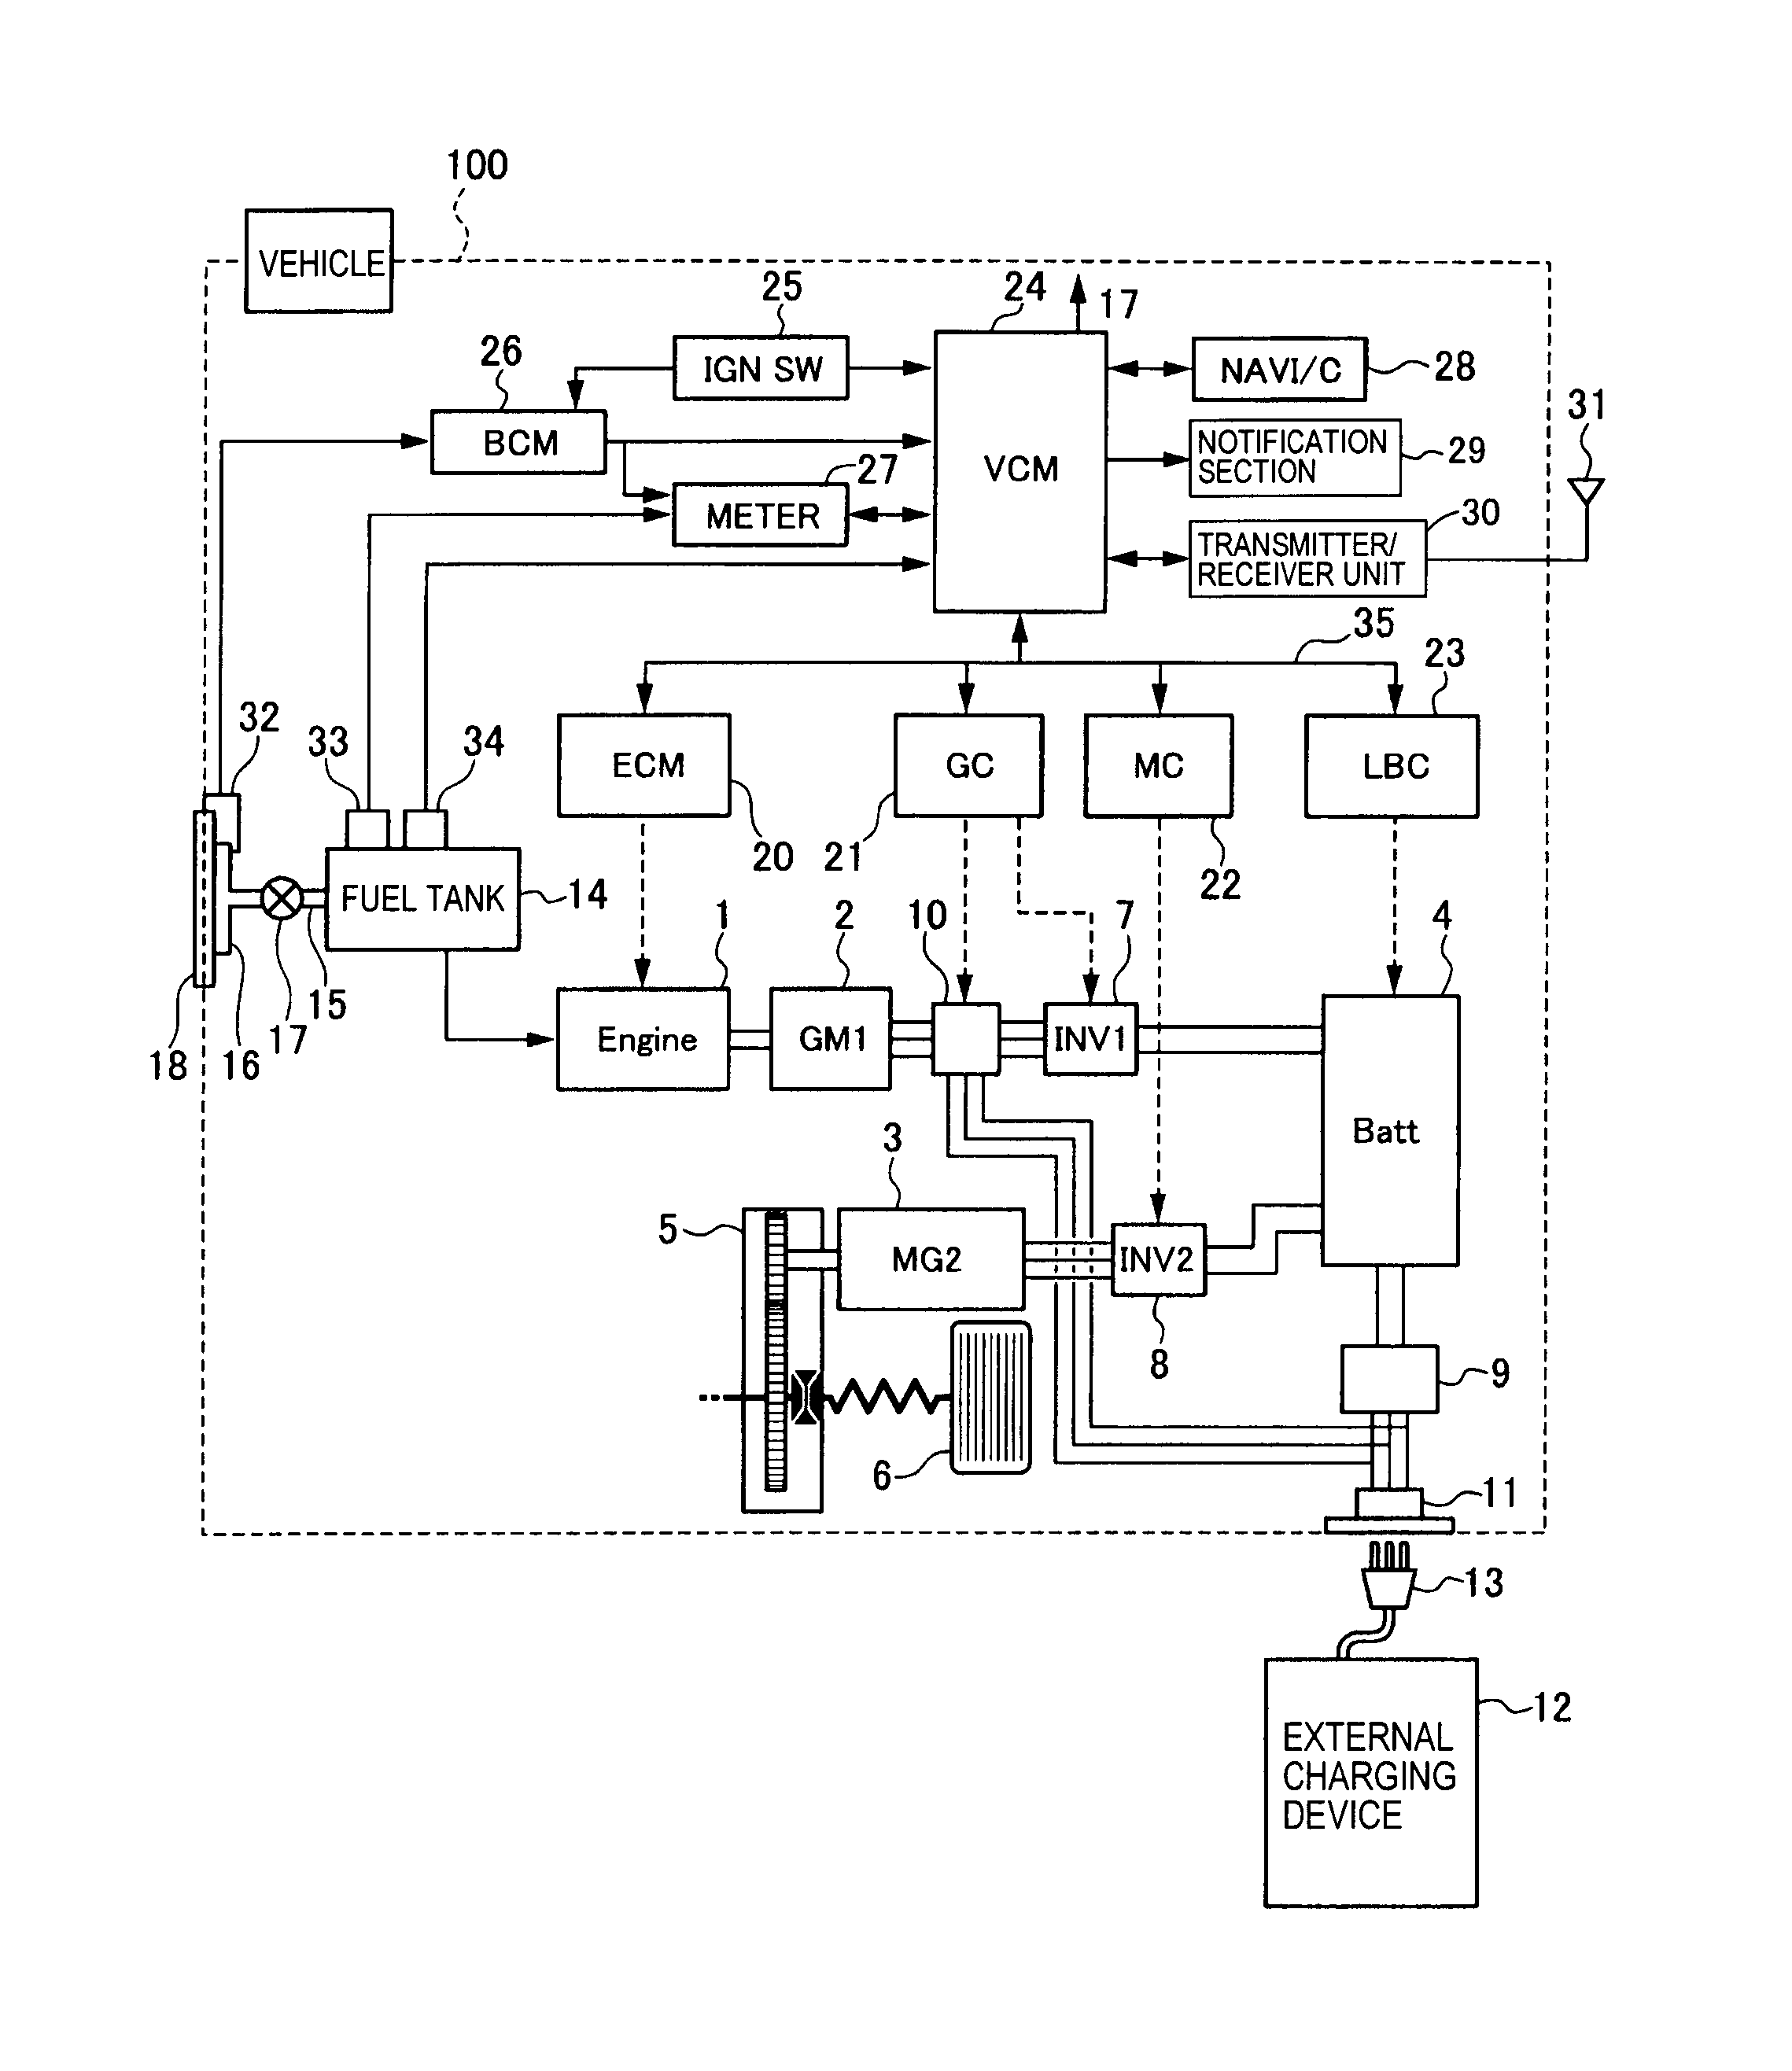 omex 600 wiring diagram